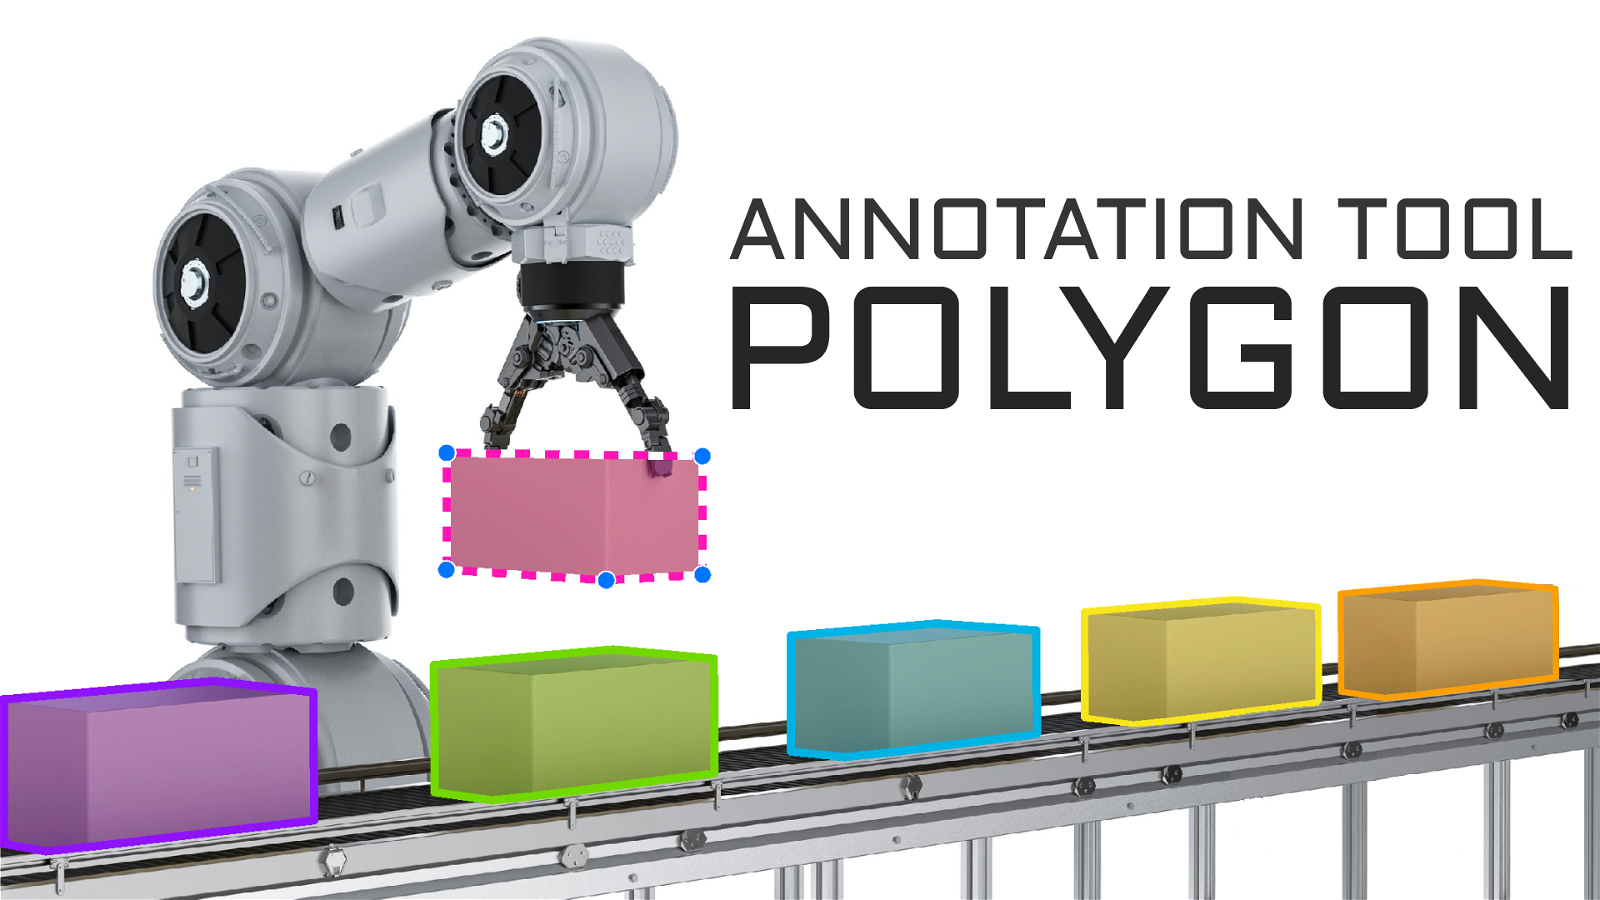 Polygon Annotation Best Practices for Semantic & Instance Segmentation